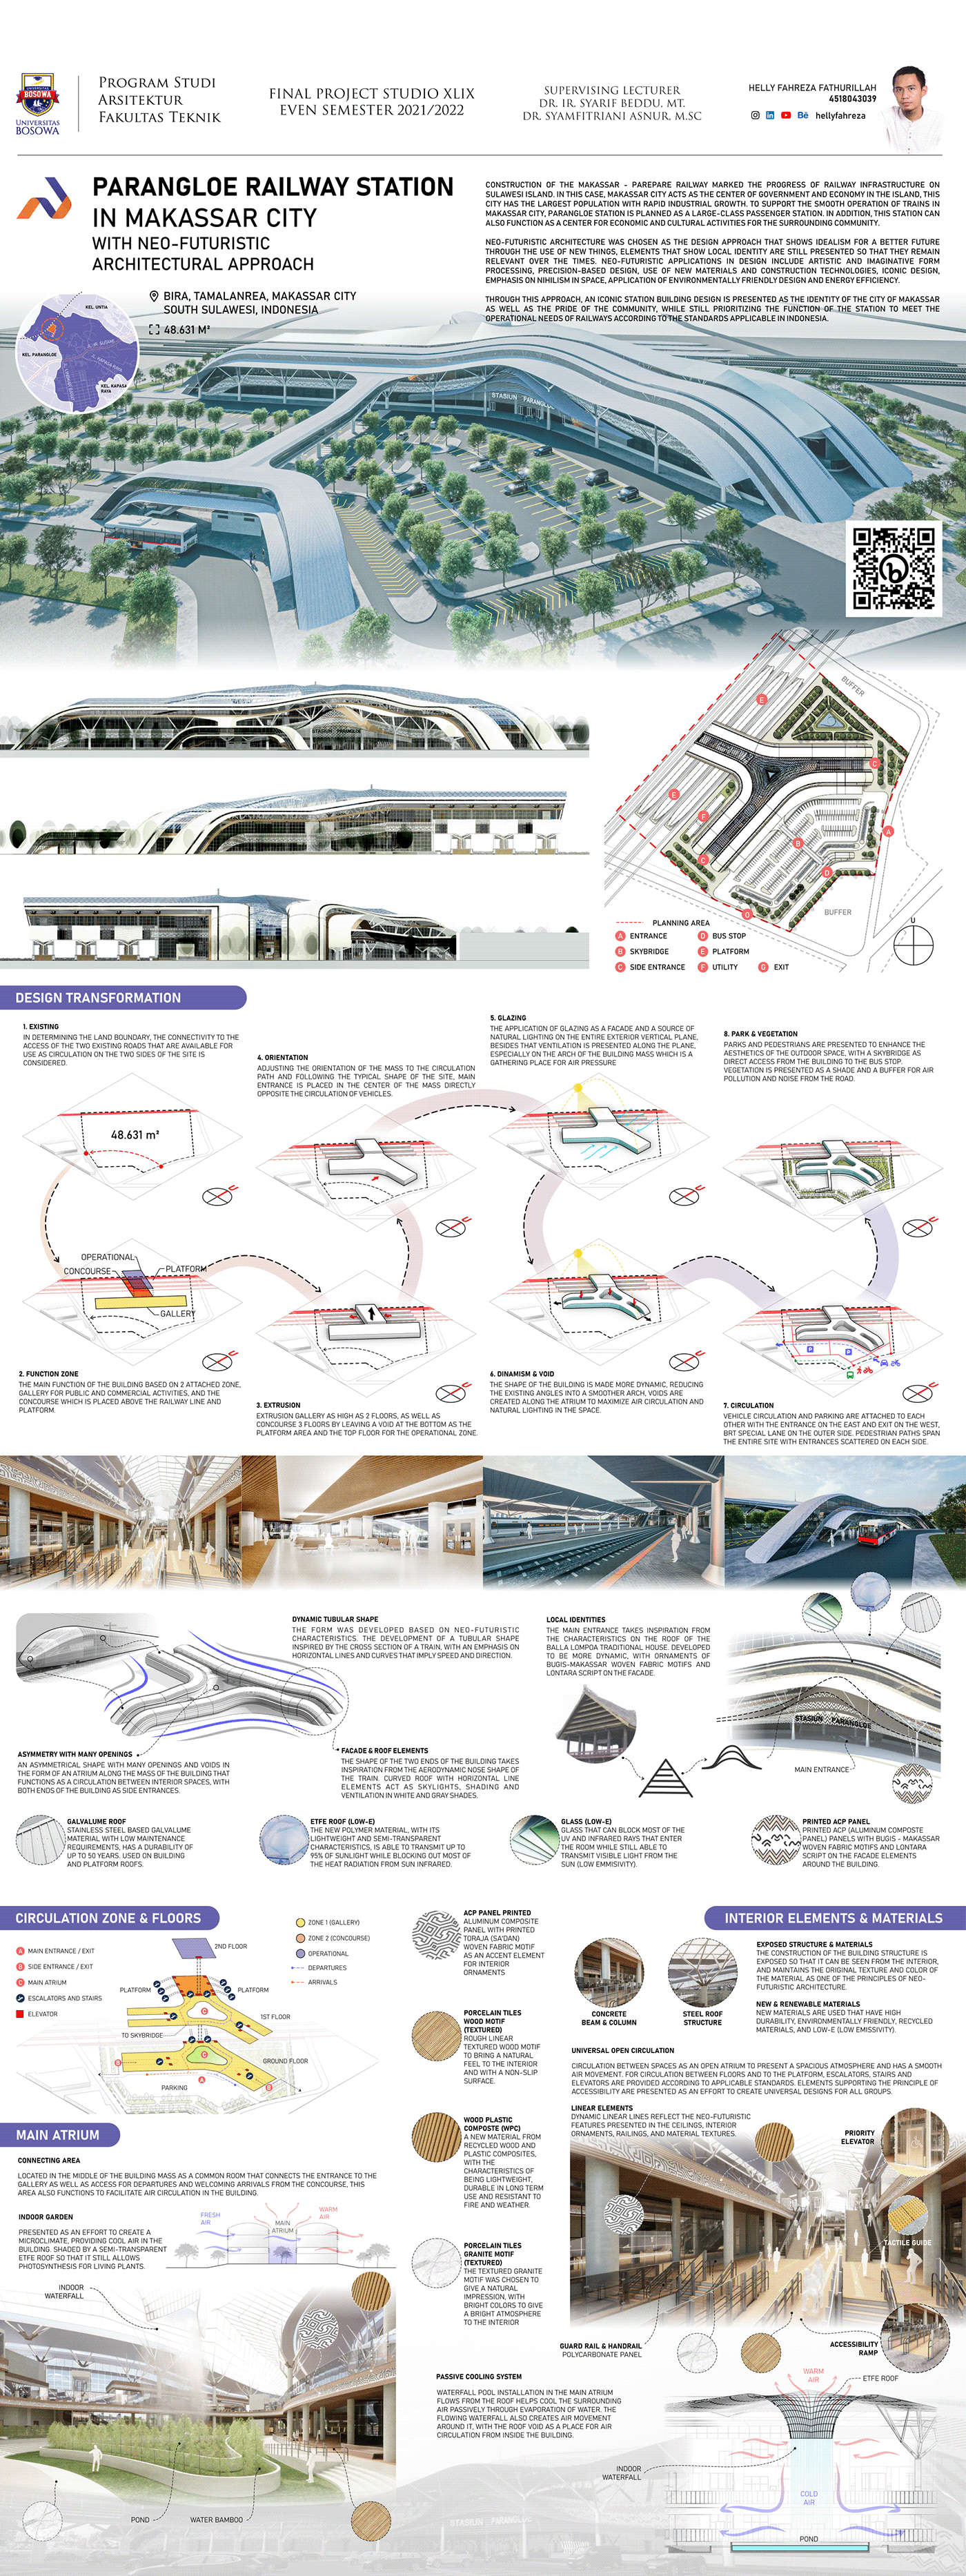 building futuristic FUTURISM train station makassar indonesia